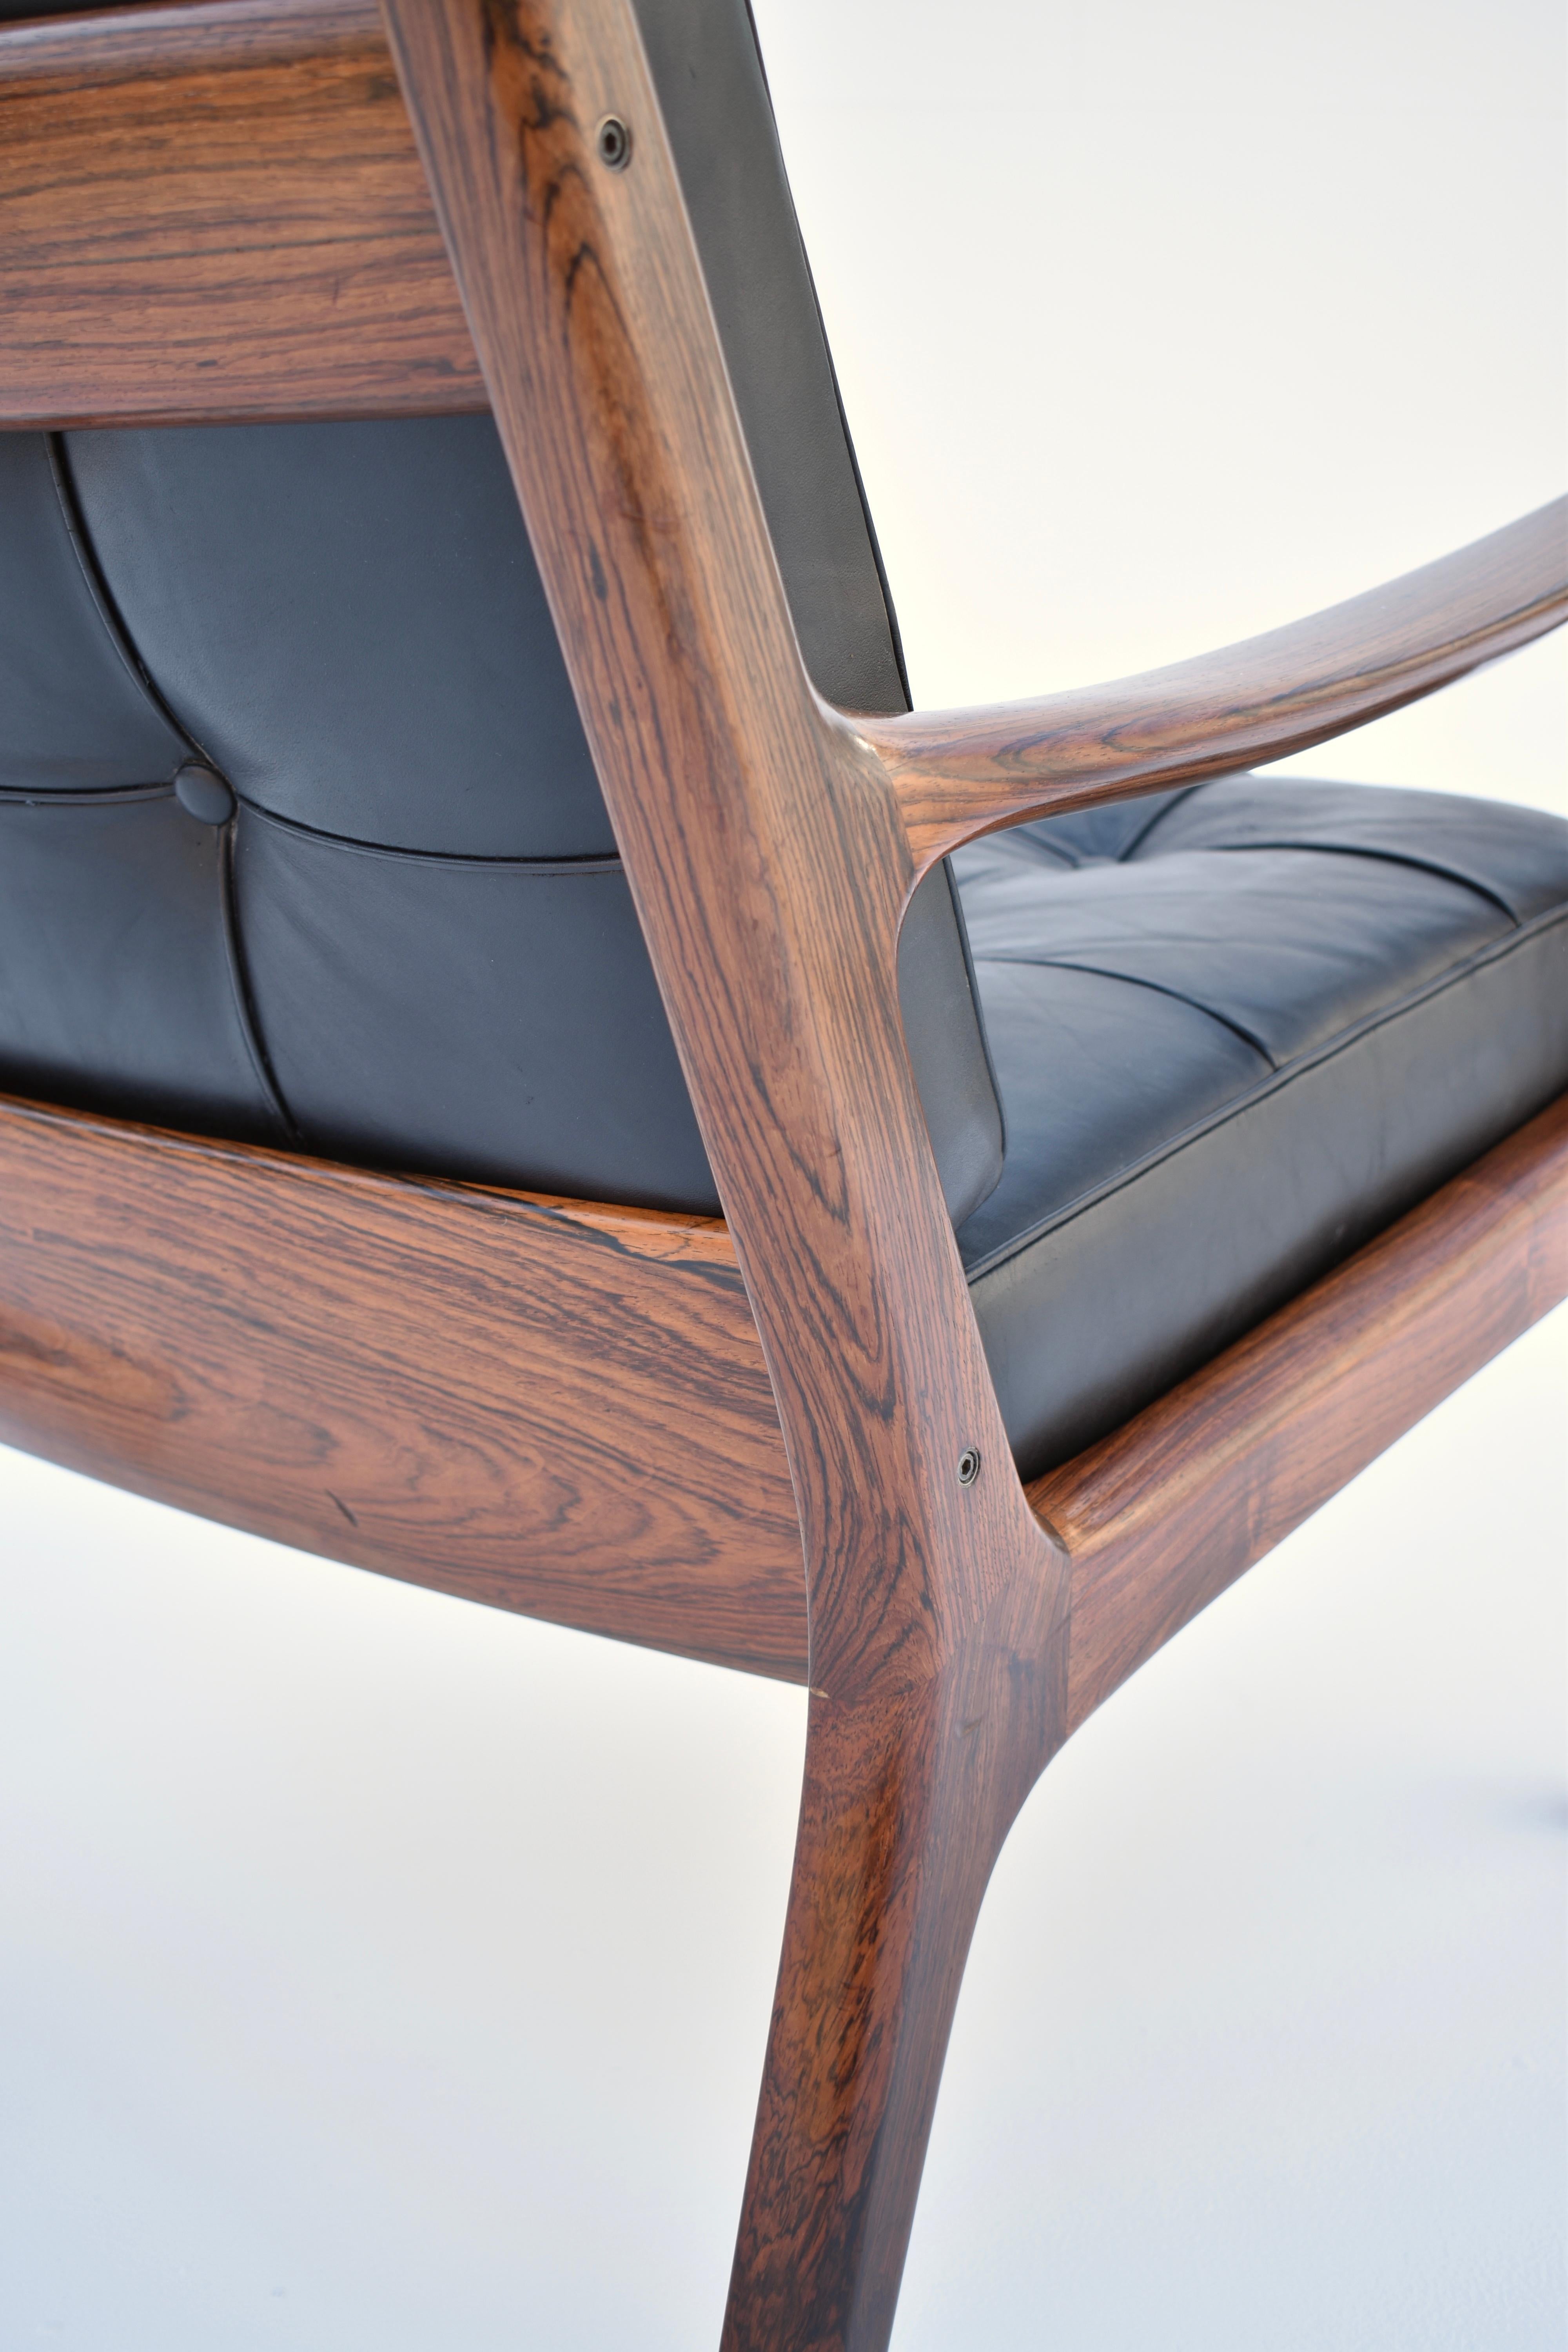 Ole Wanscher Model 166 Rosewood 'Senator' Lounge Chair For France & Son, Denmark 2